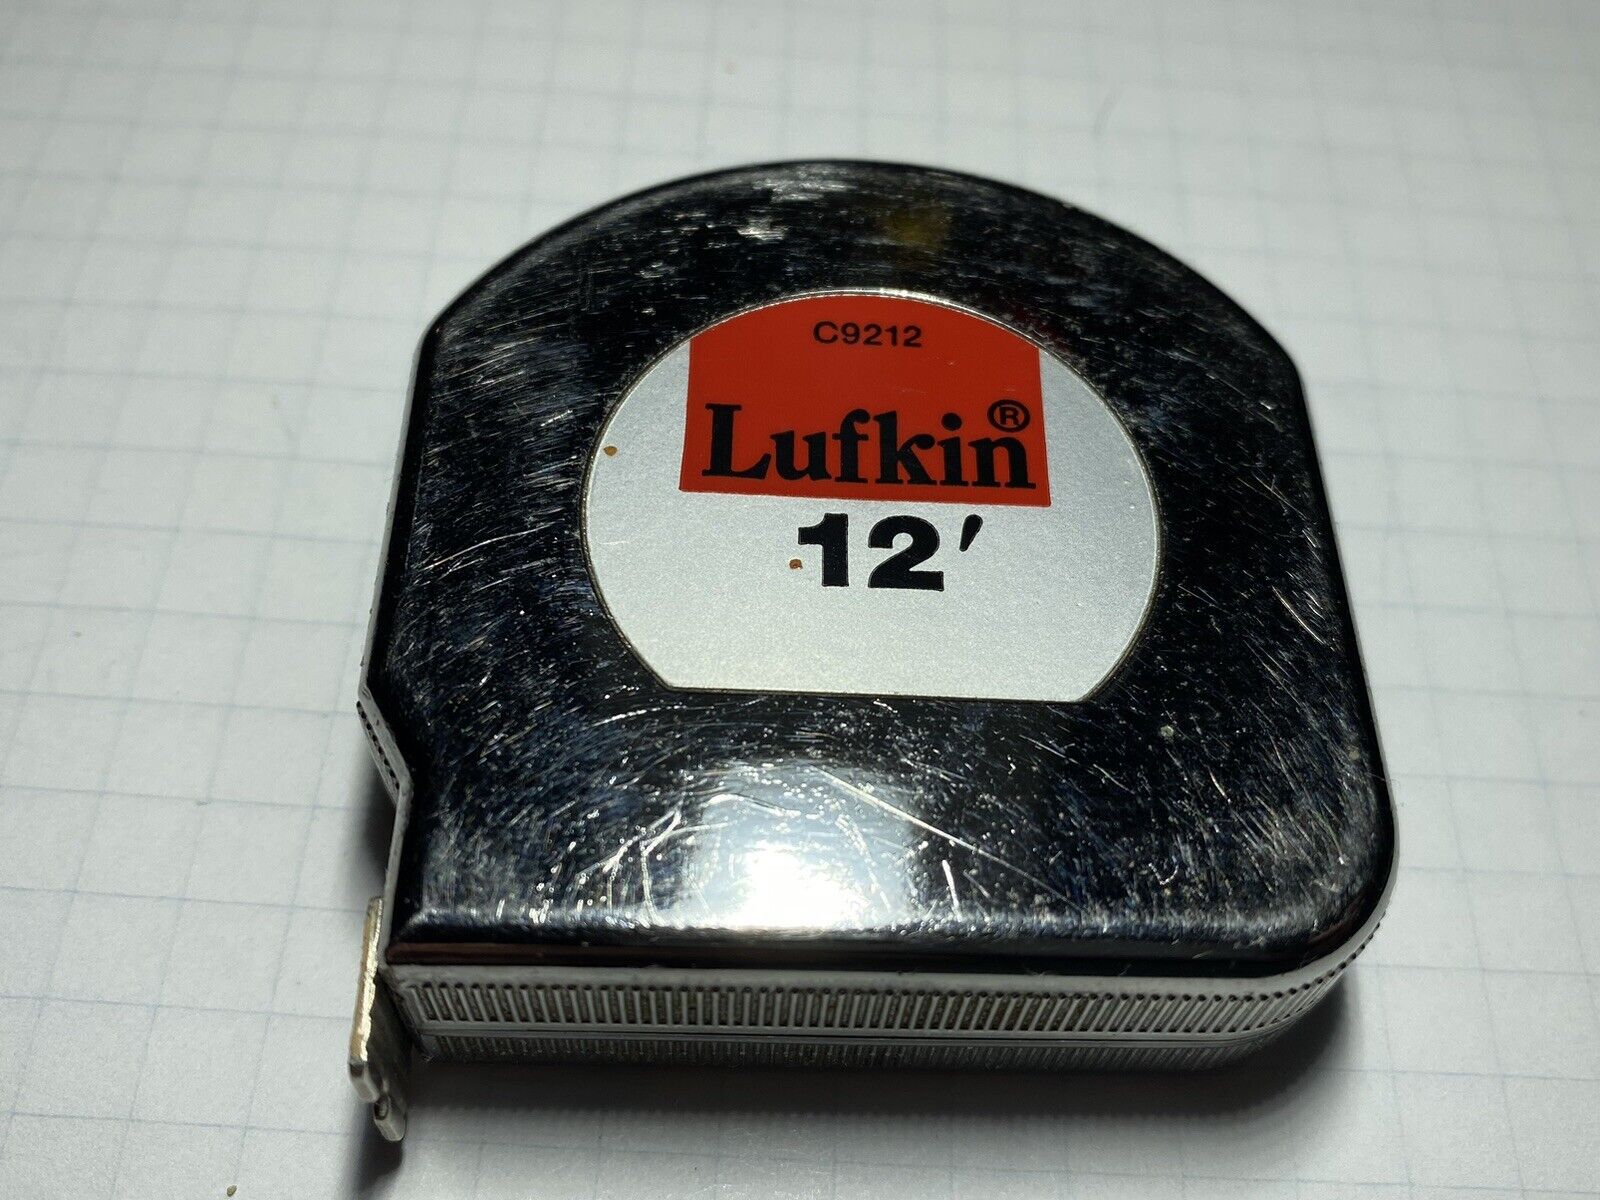 Vintage Lufkin 12' C9212X Measuring Tape Rule Tool USA Made Retro Silver Tone